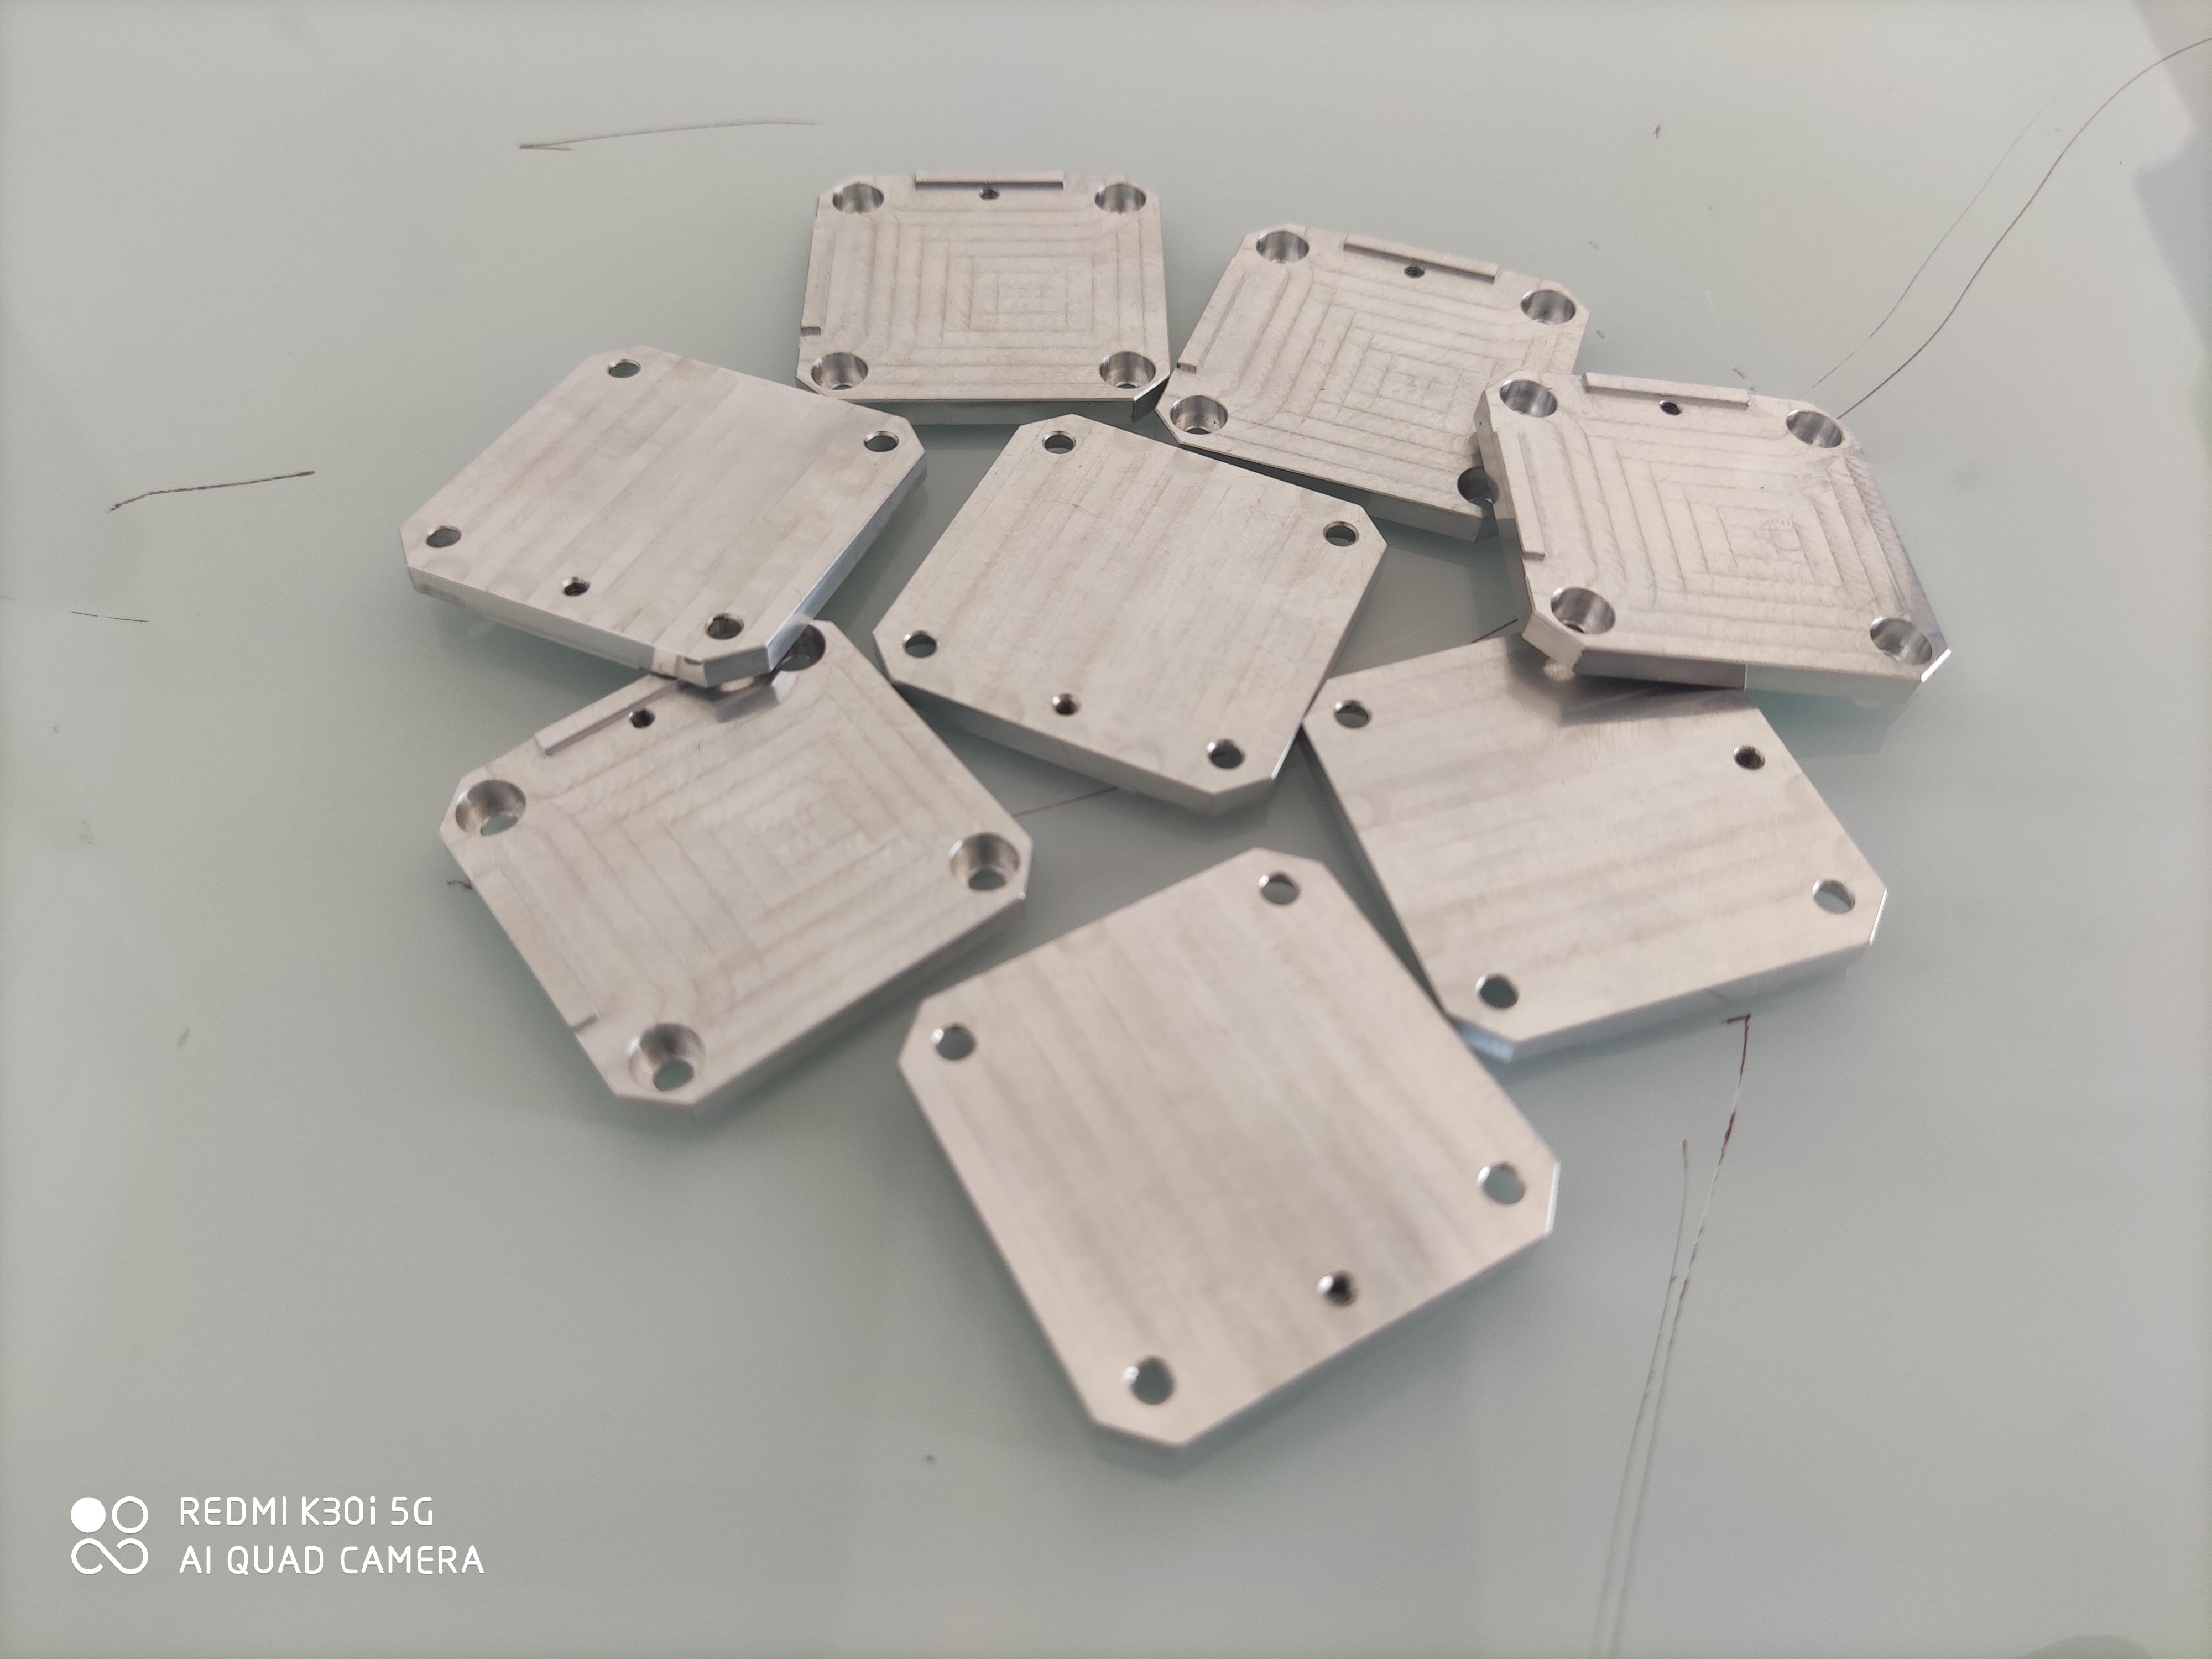 Deckel optical instrument components high quality aluminum 6082-T6 cnc machined part